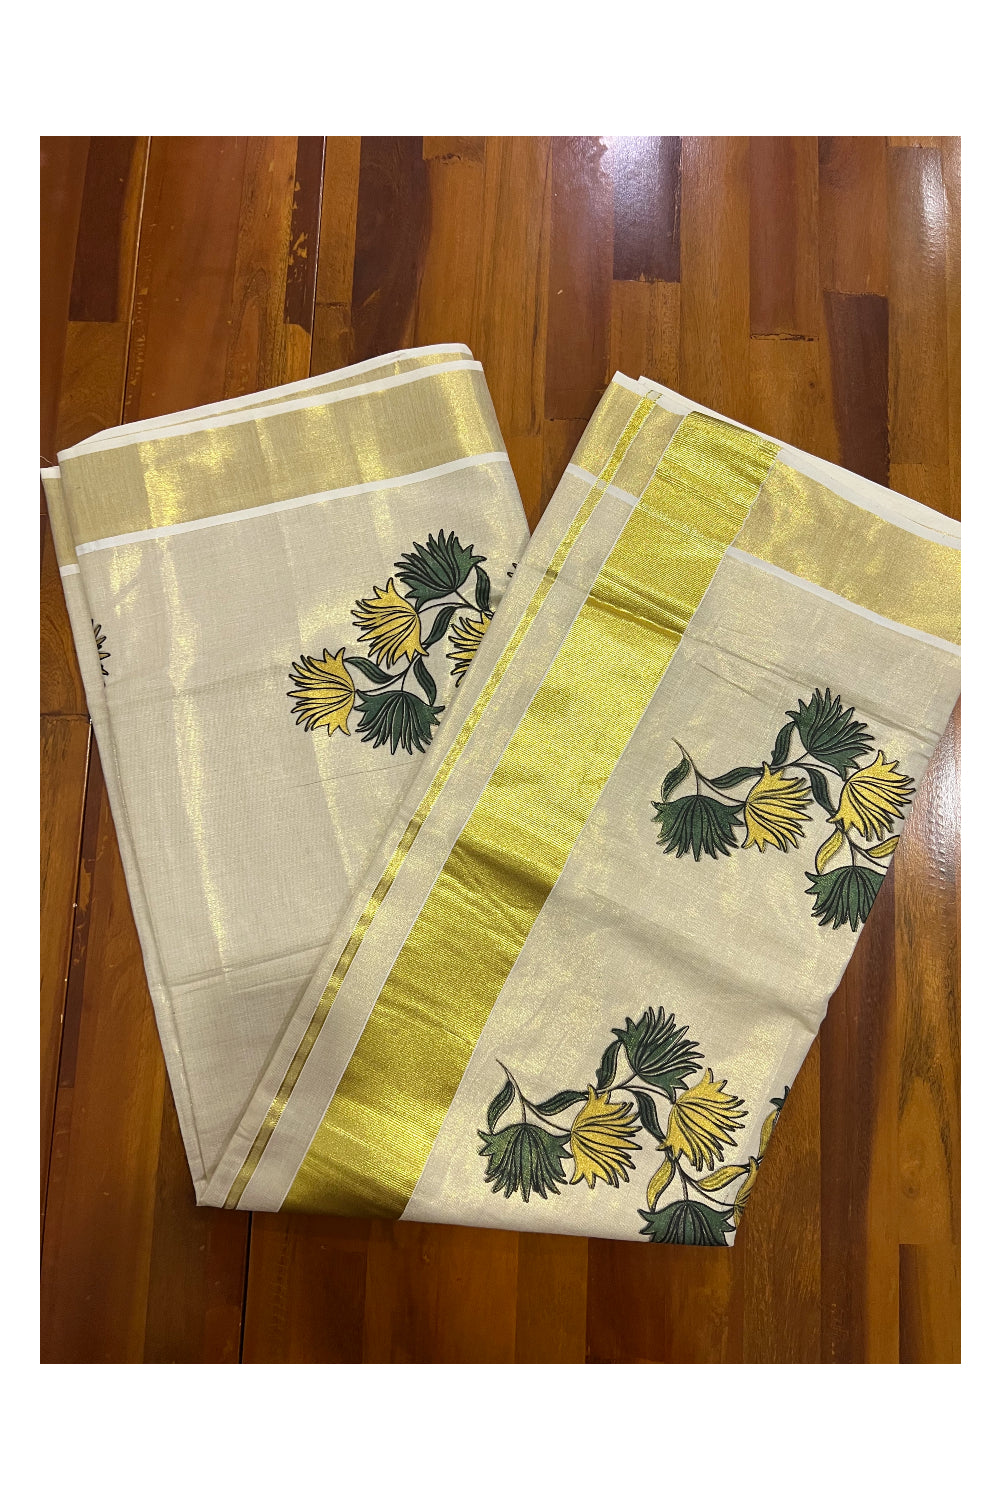 Kerala Tissue Kasavu Saree With Mural Printed Green and Yellow Floral Design